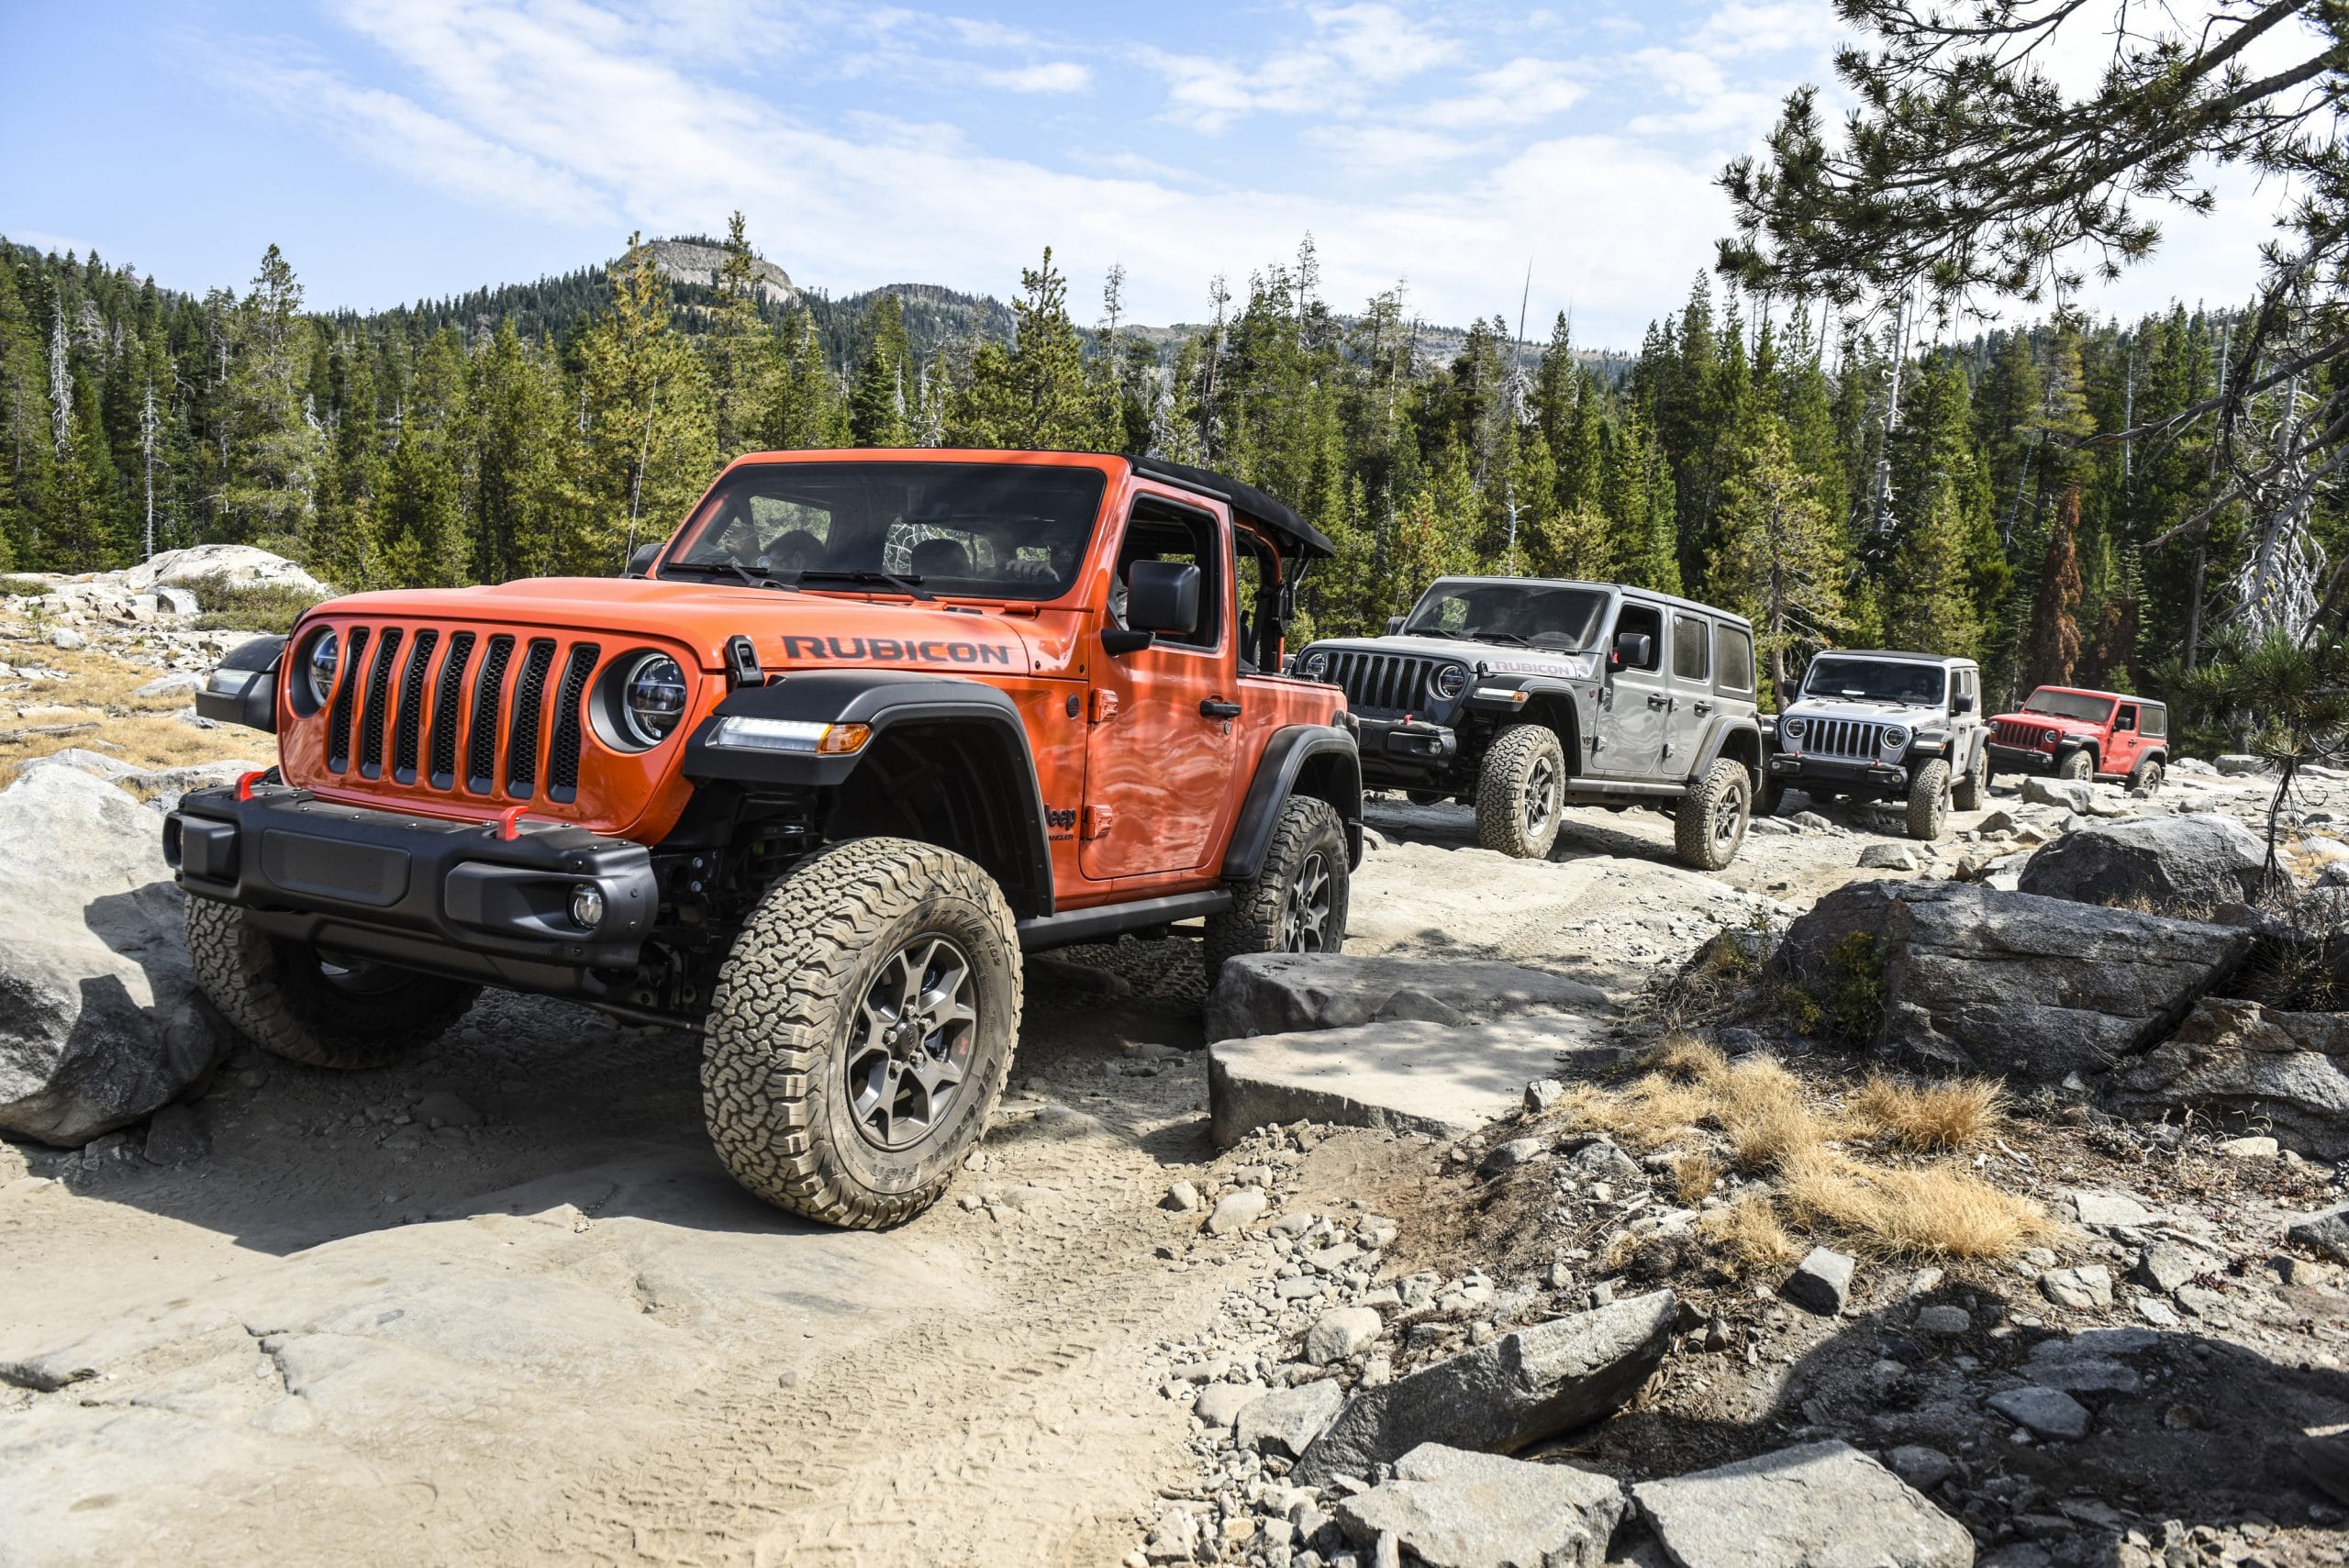 01 9th moment Rubicon Trail US specs vehicles scaled 12 ορόσημα, για τα 80α γενέθλια της Jeep